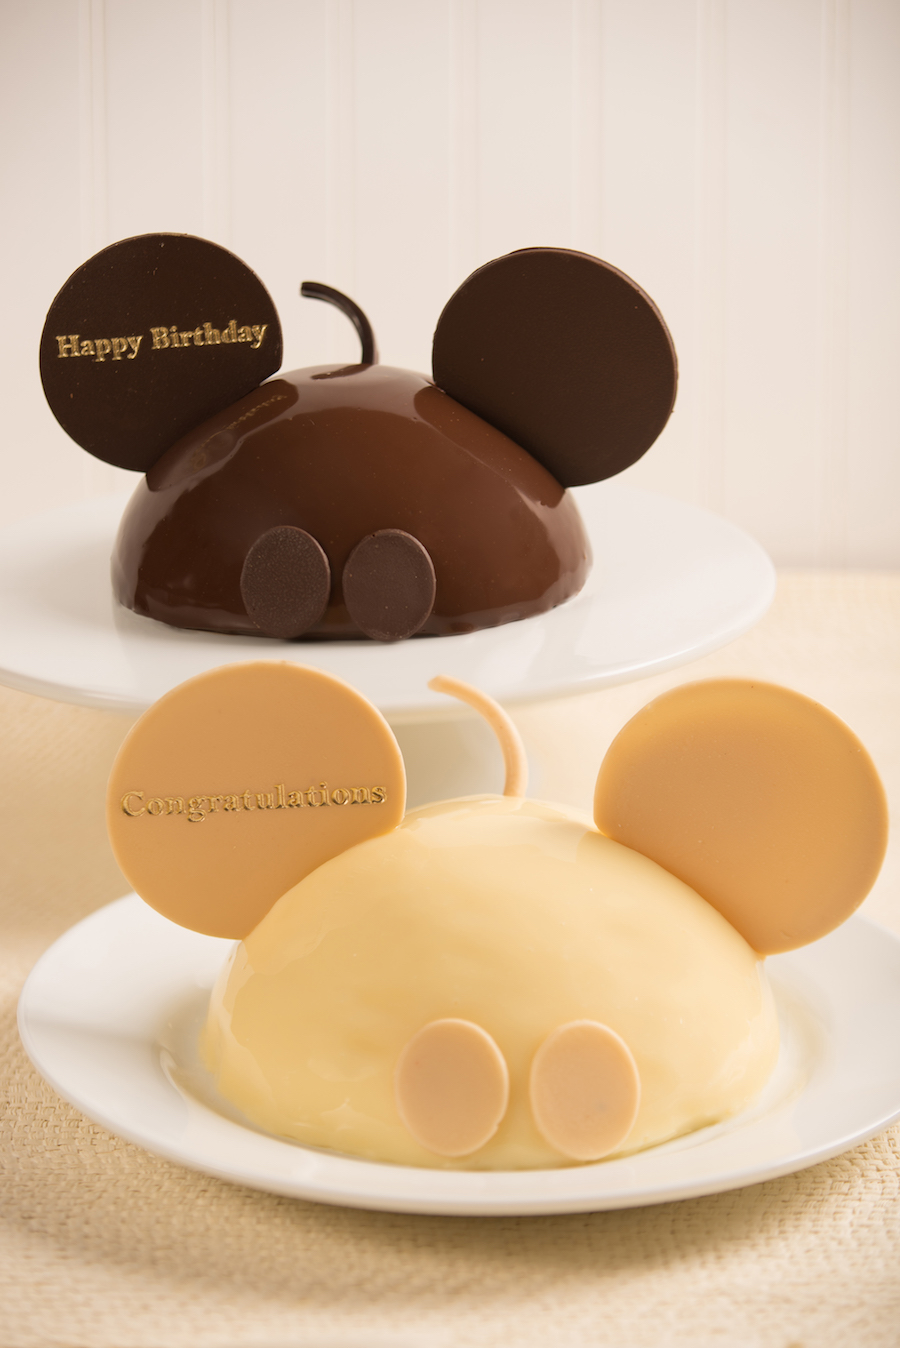 New Celebration Cakes Coming to Walt Disney World